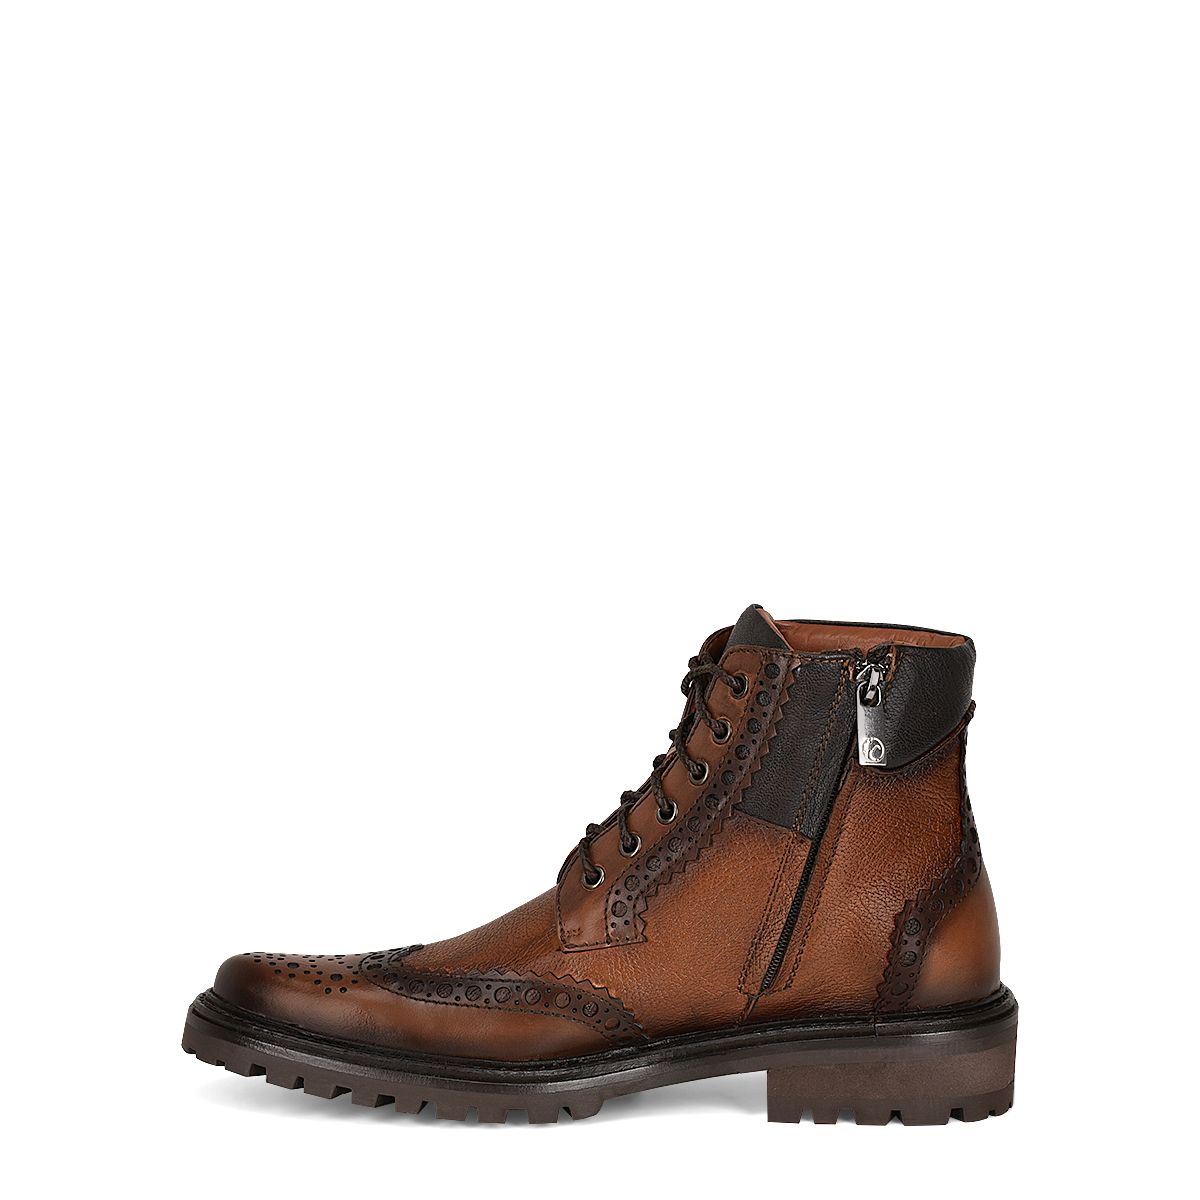 Honey leather bostonian urban boot